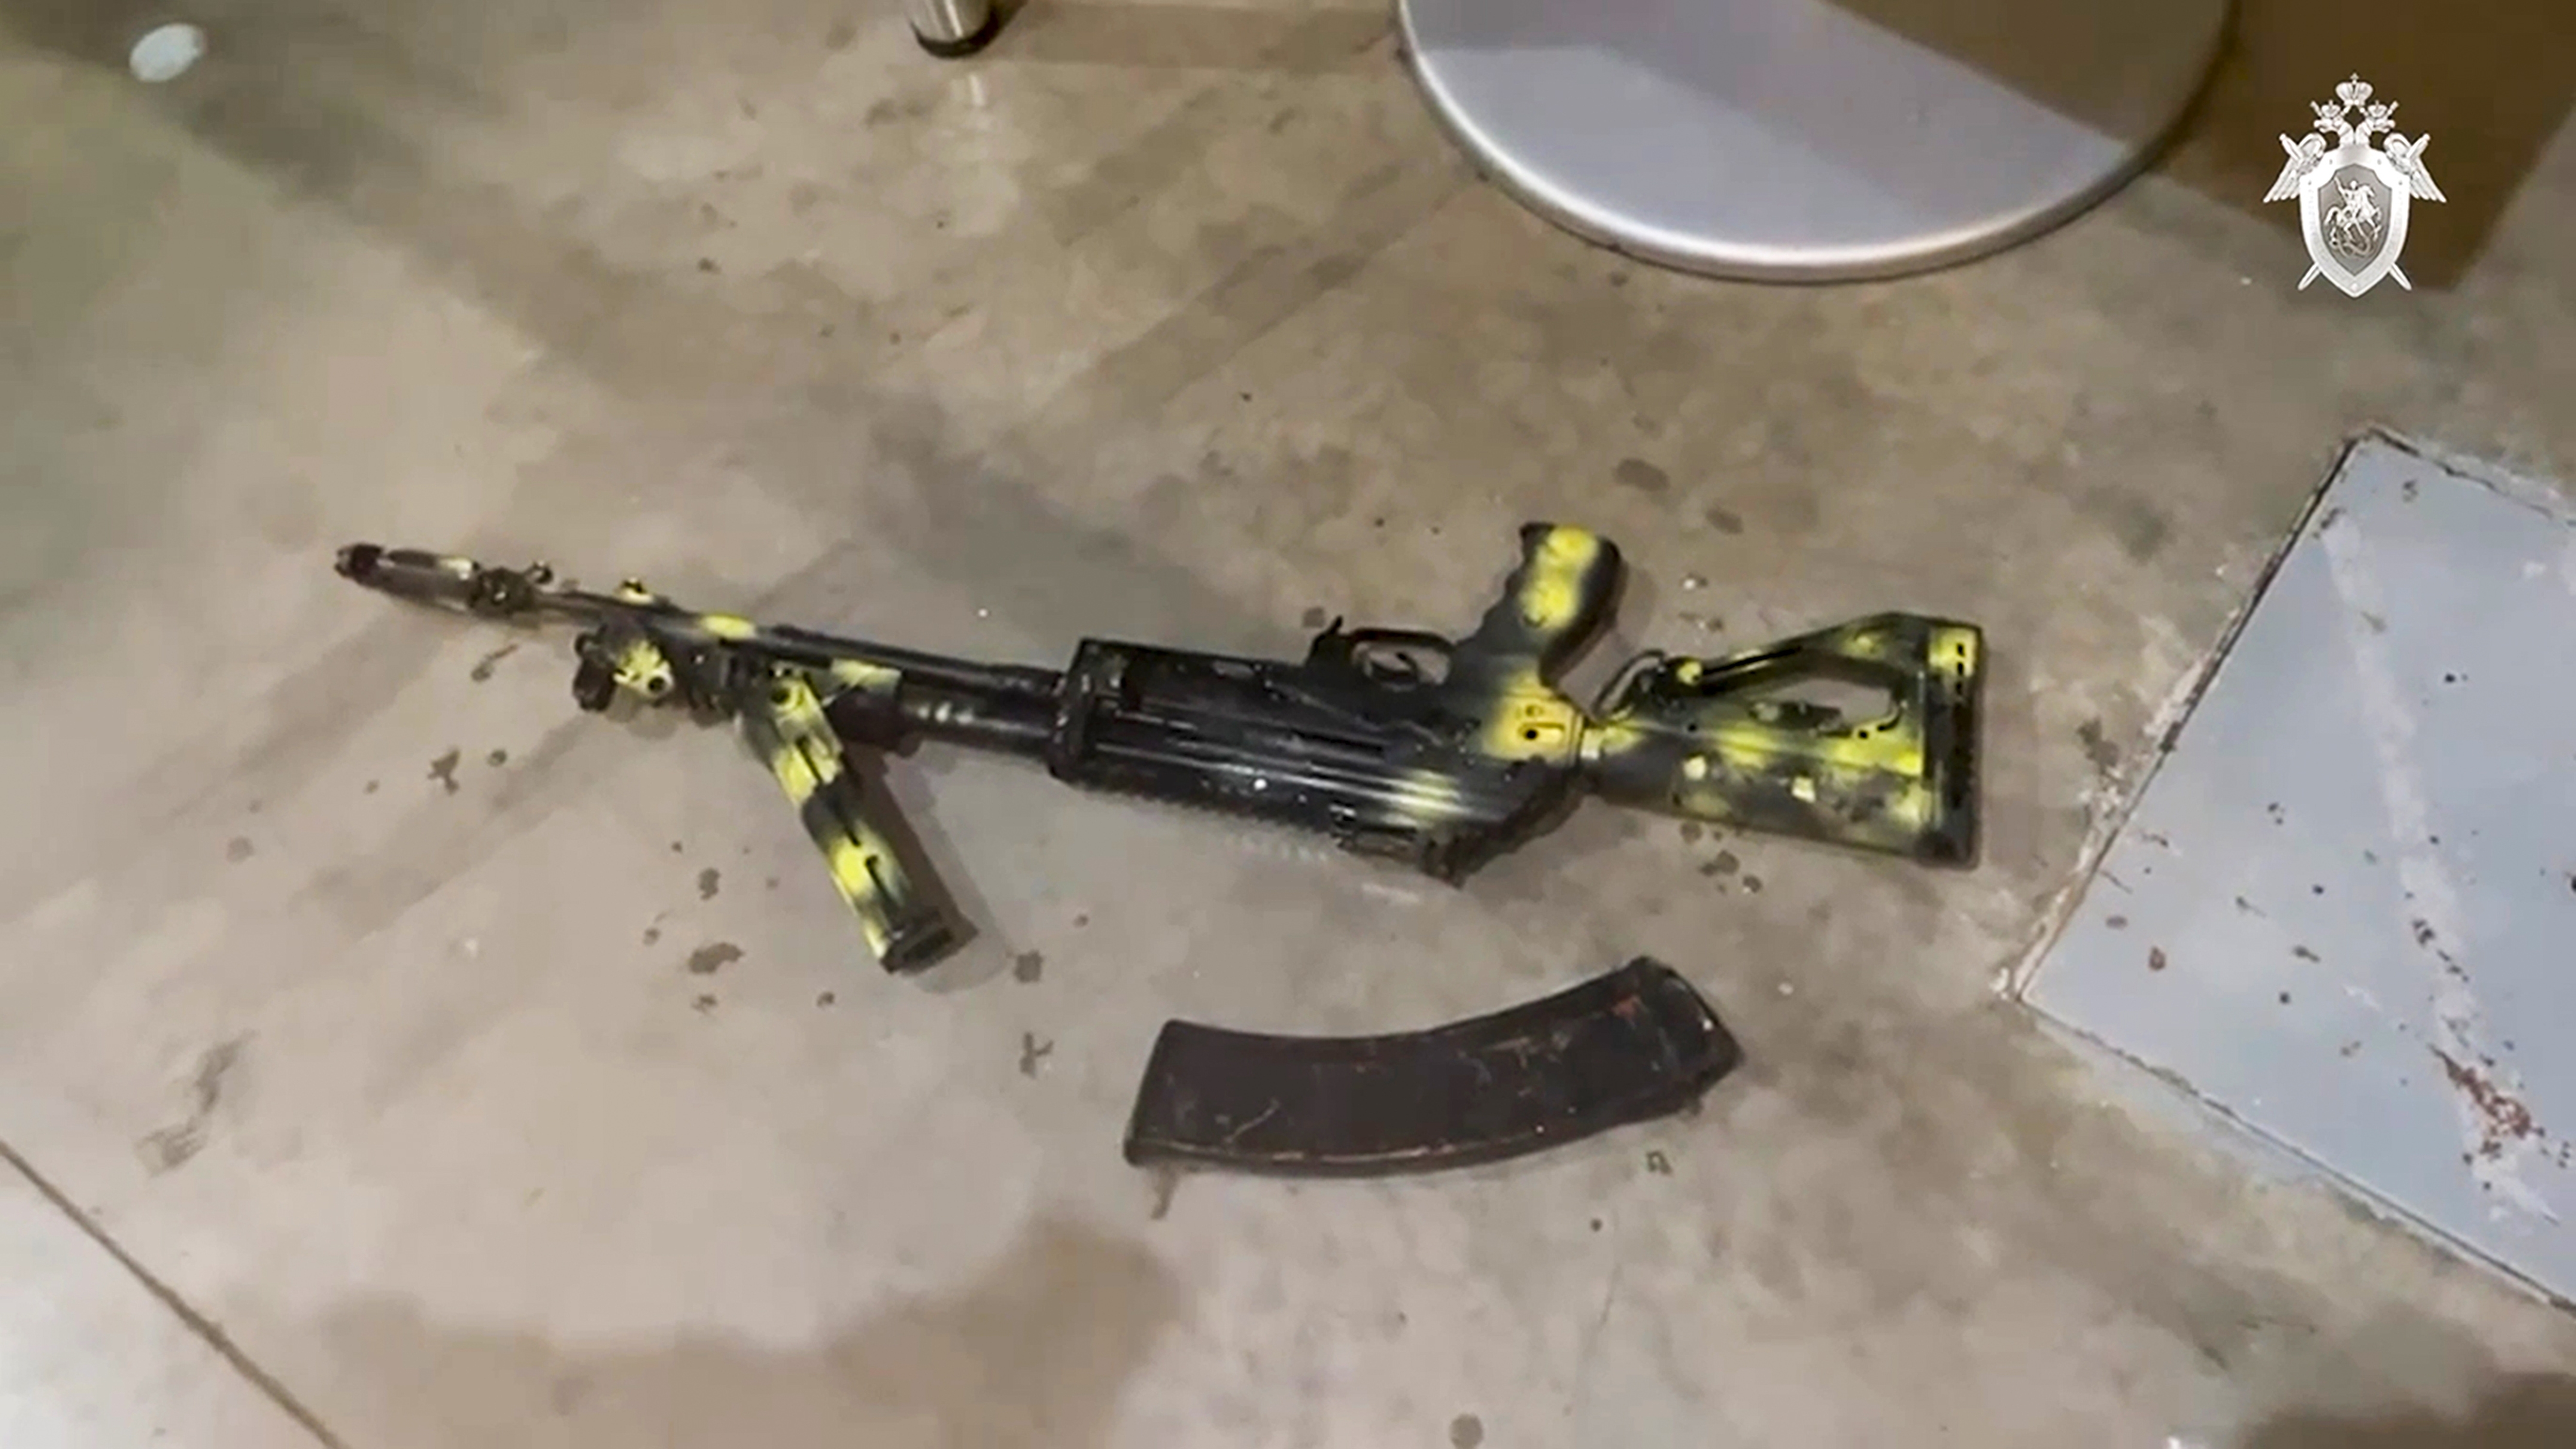 I俄罗斯调查人员稍早公布在事发现场找到的AK-47枪械和弹匣。美联社